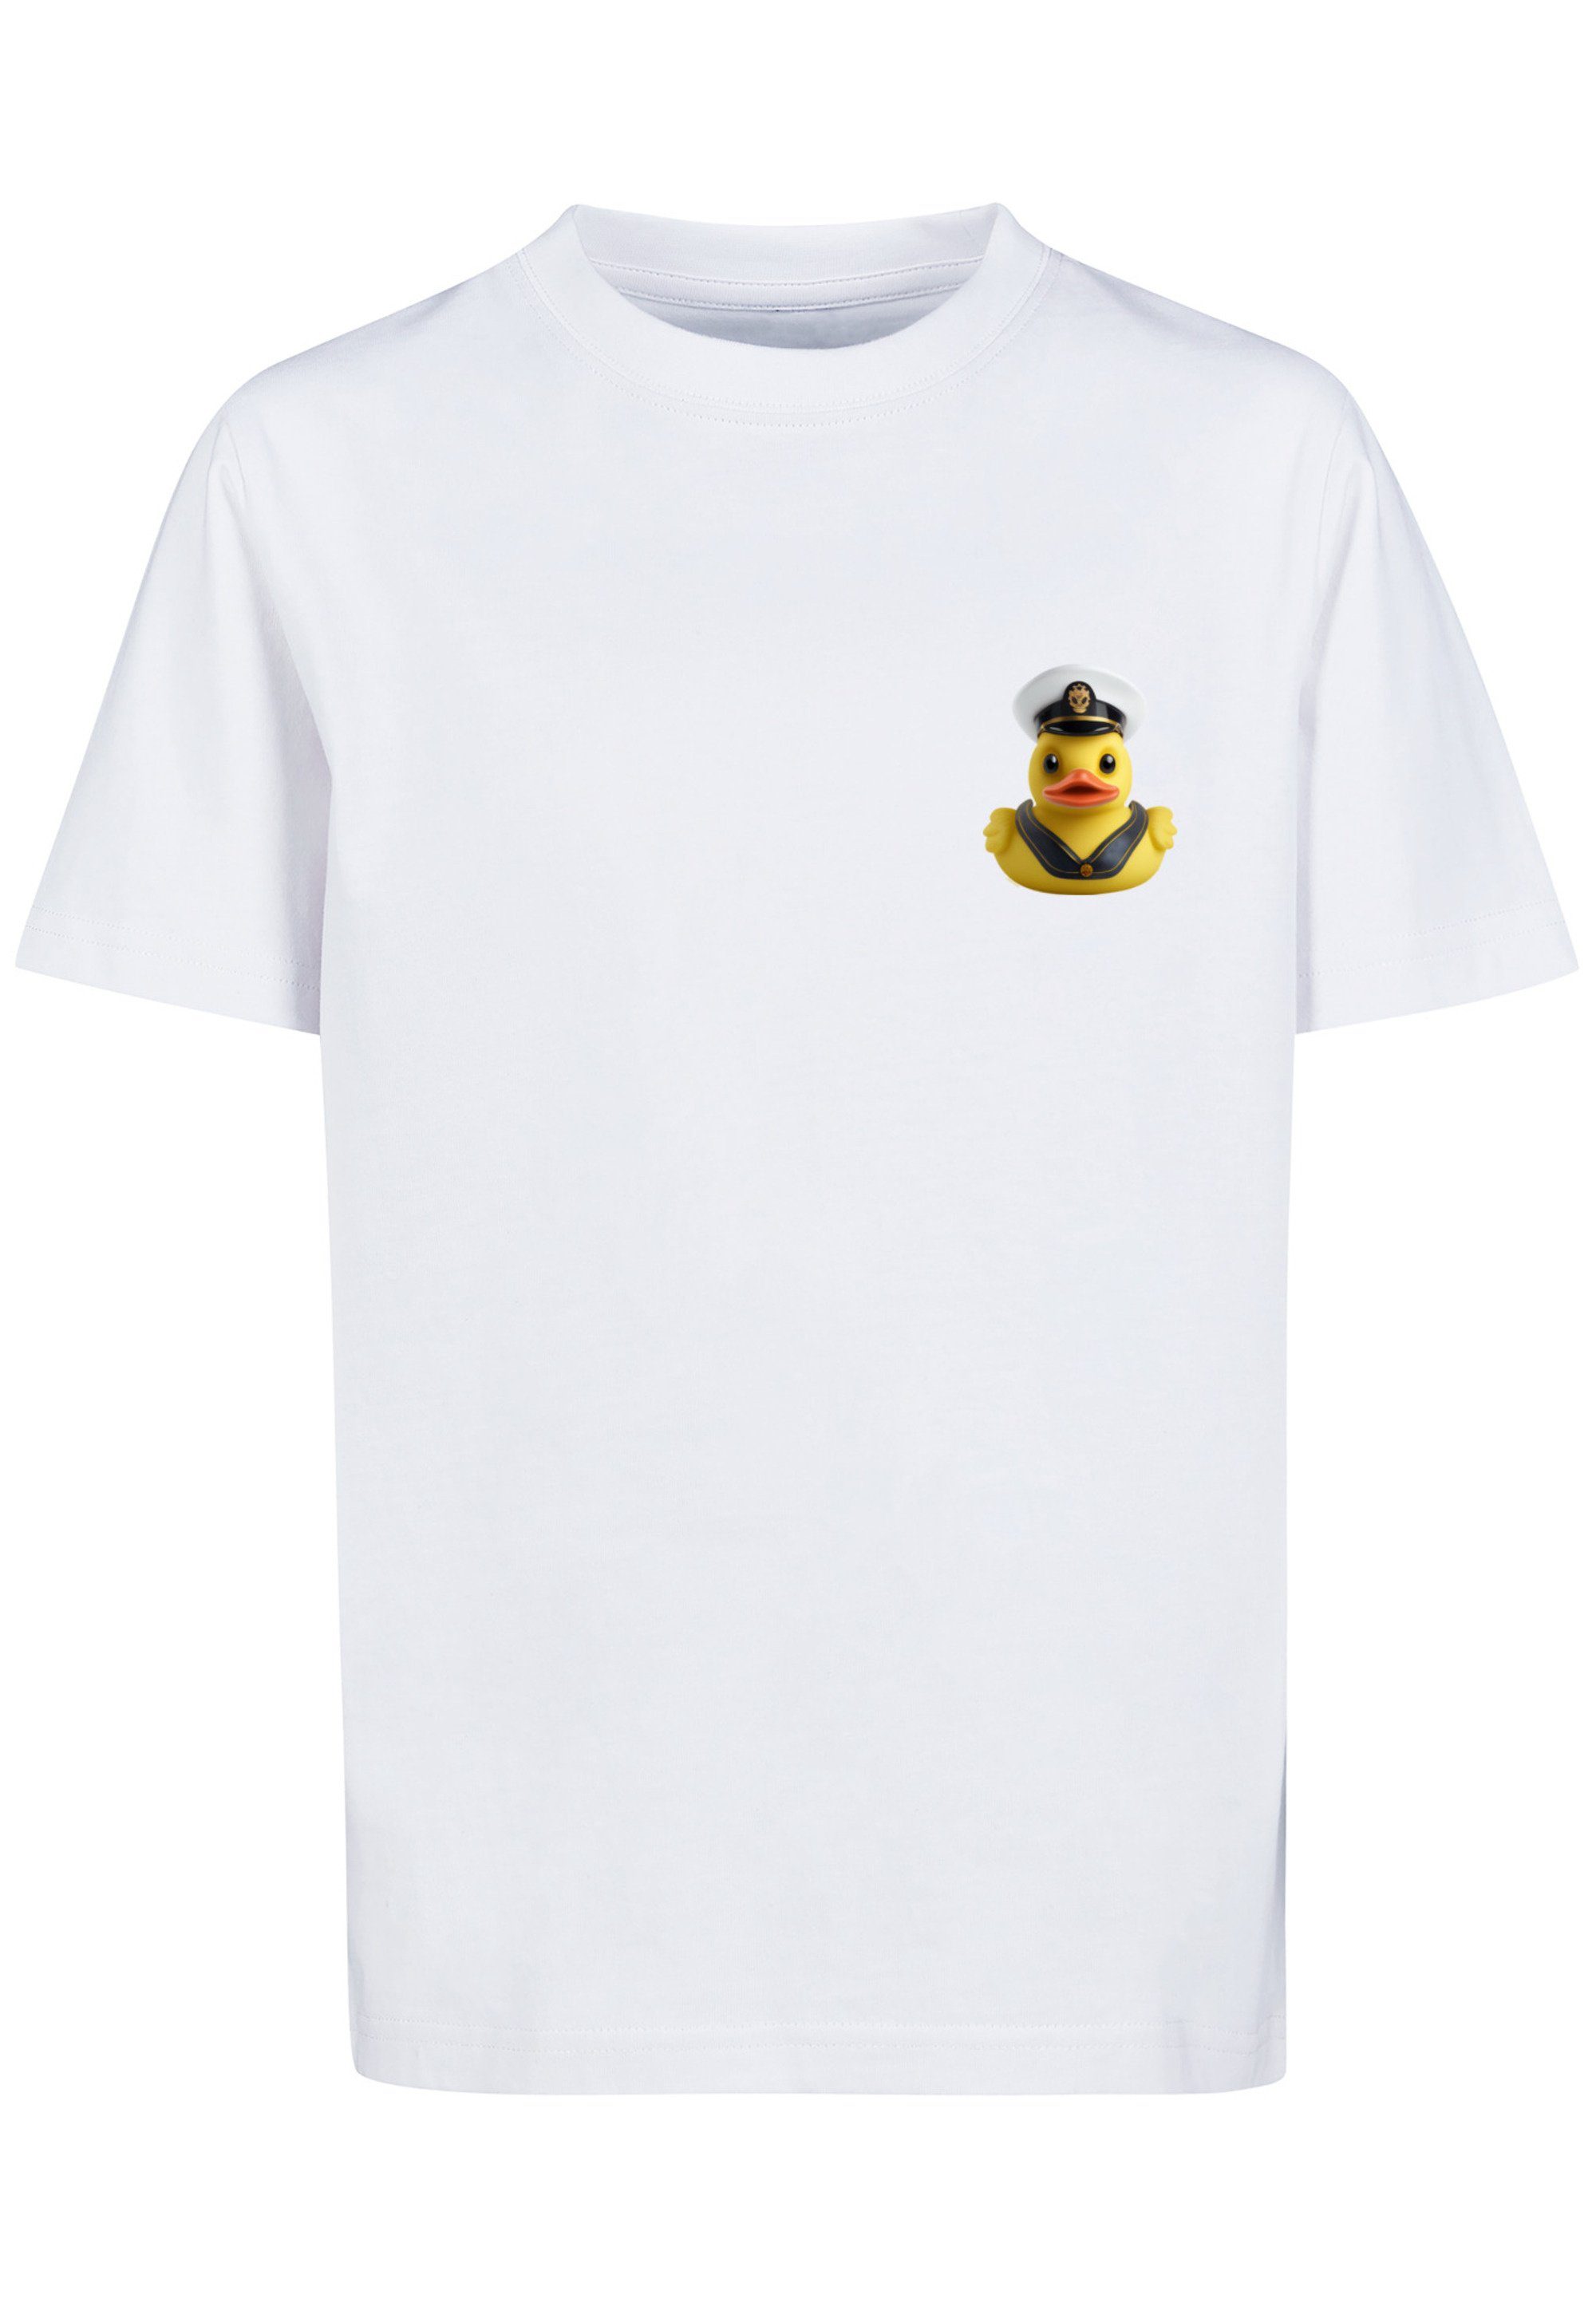 F4NT4STIC T-Shirt Rubber Duck Captain weiß Print UNISEX TEE